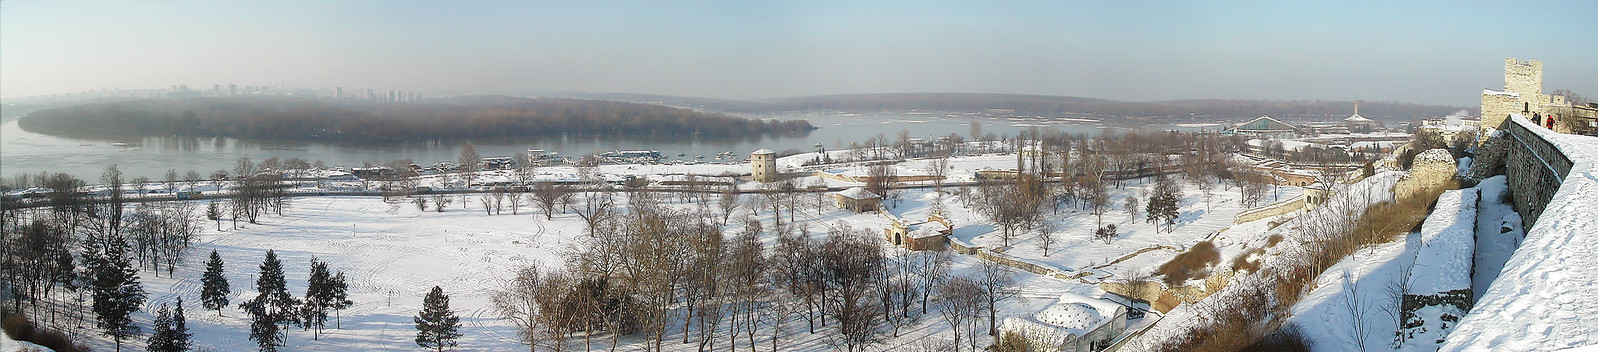 Belgrade, Winter Panorama at Dusk